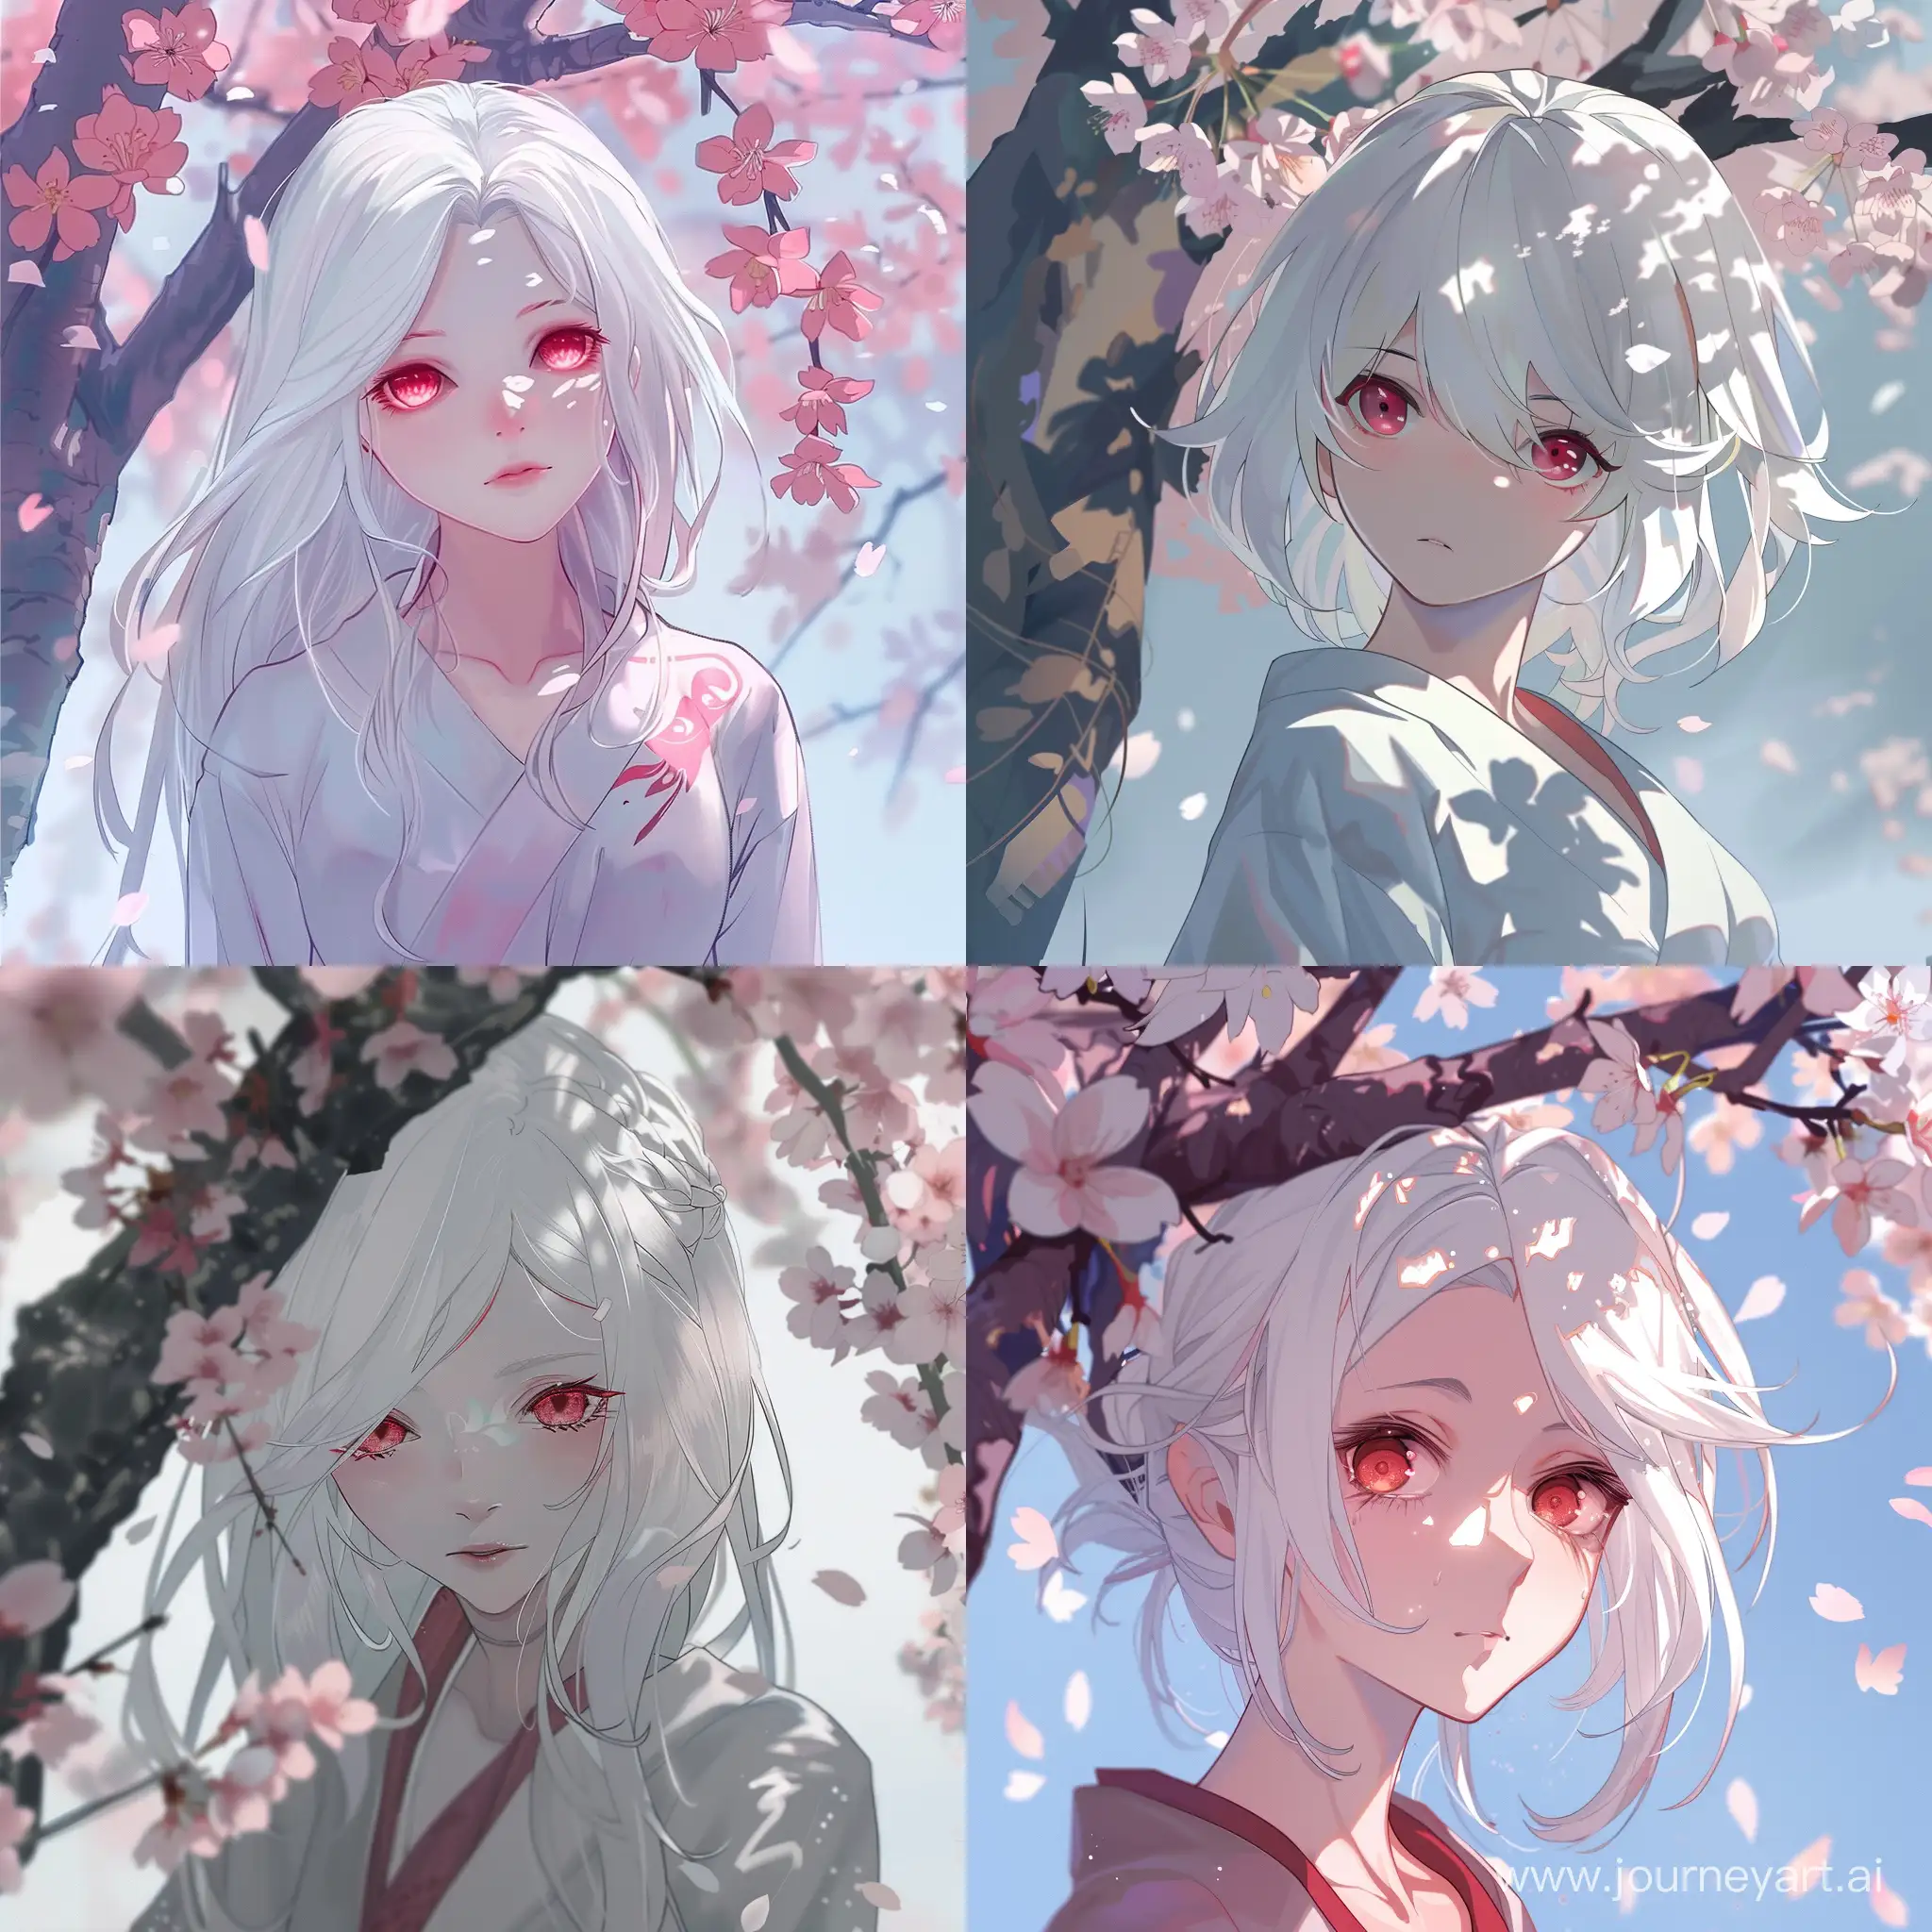 Serene-WhiteHaired-Sister-Beneath-Cherry-Blossoms